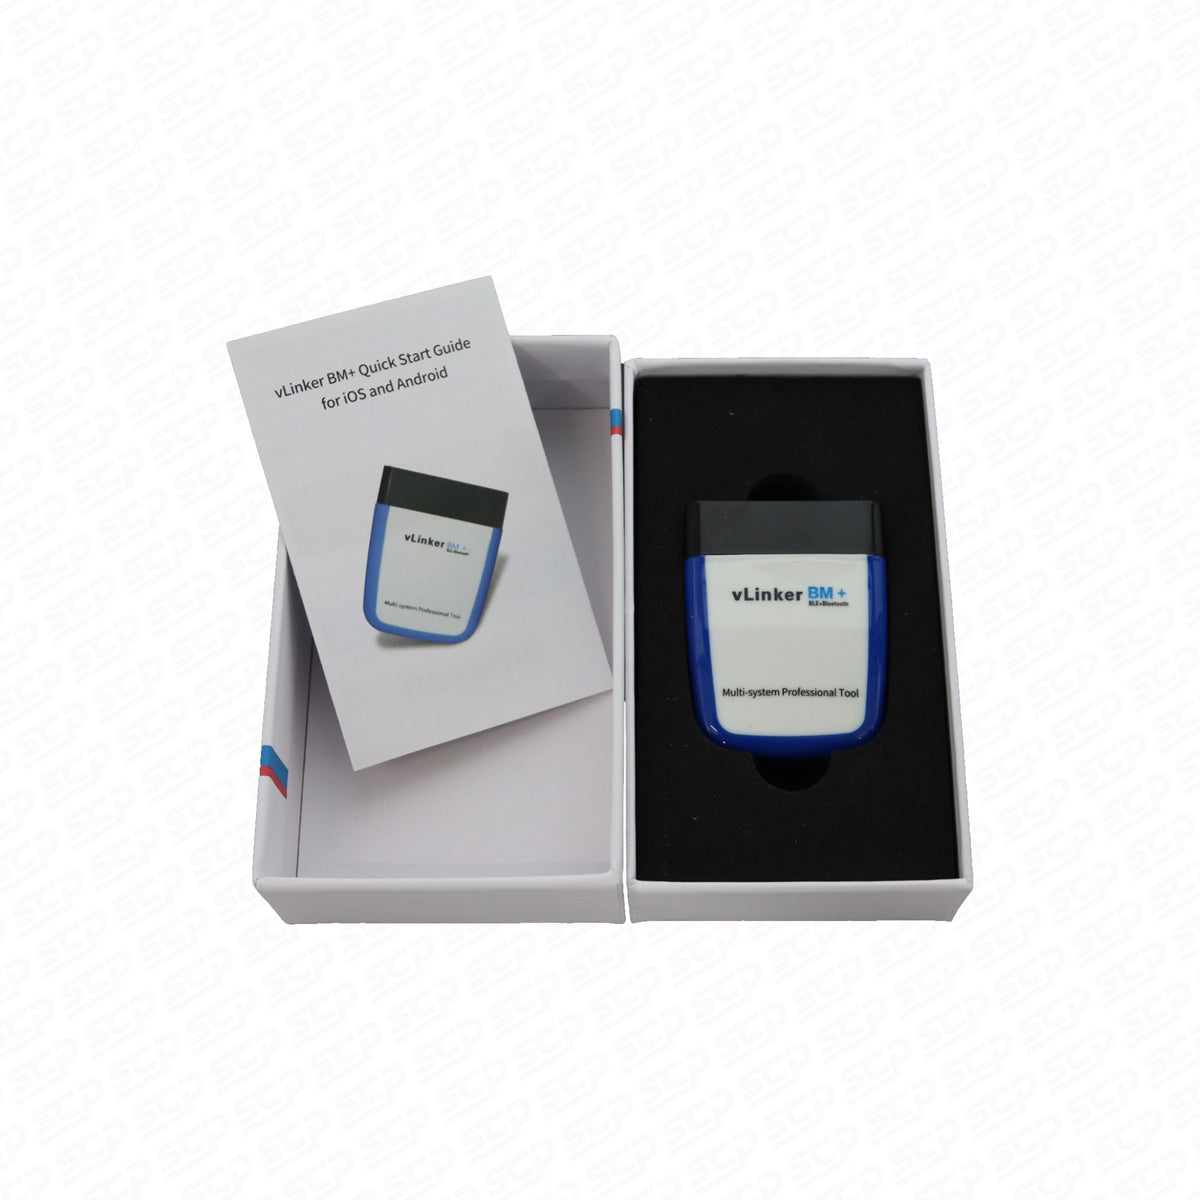 vLinker BM+ OBD2 Bluetooth 4.0 Auto Diagnostic Scanner Coding Tool